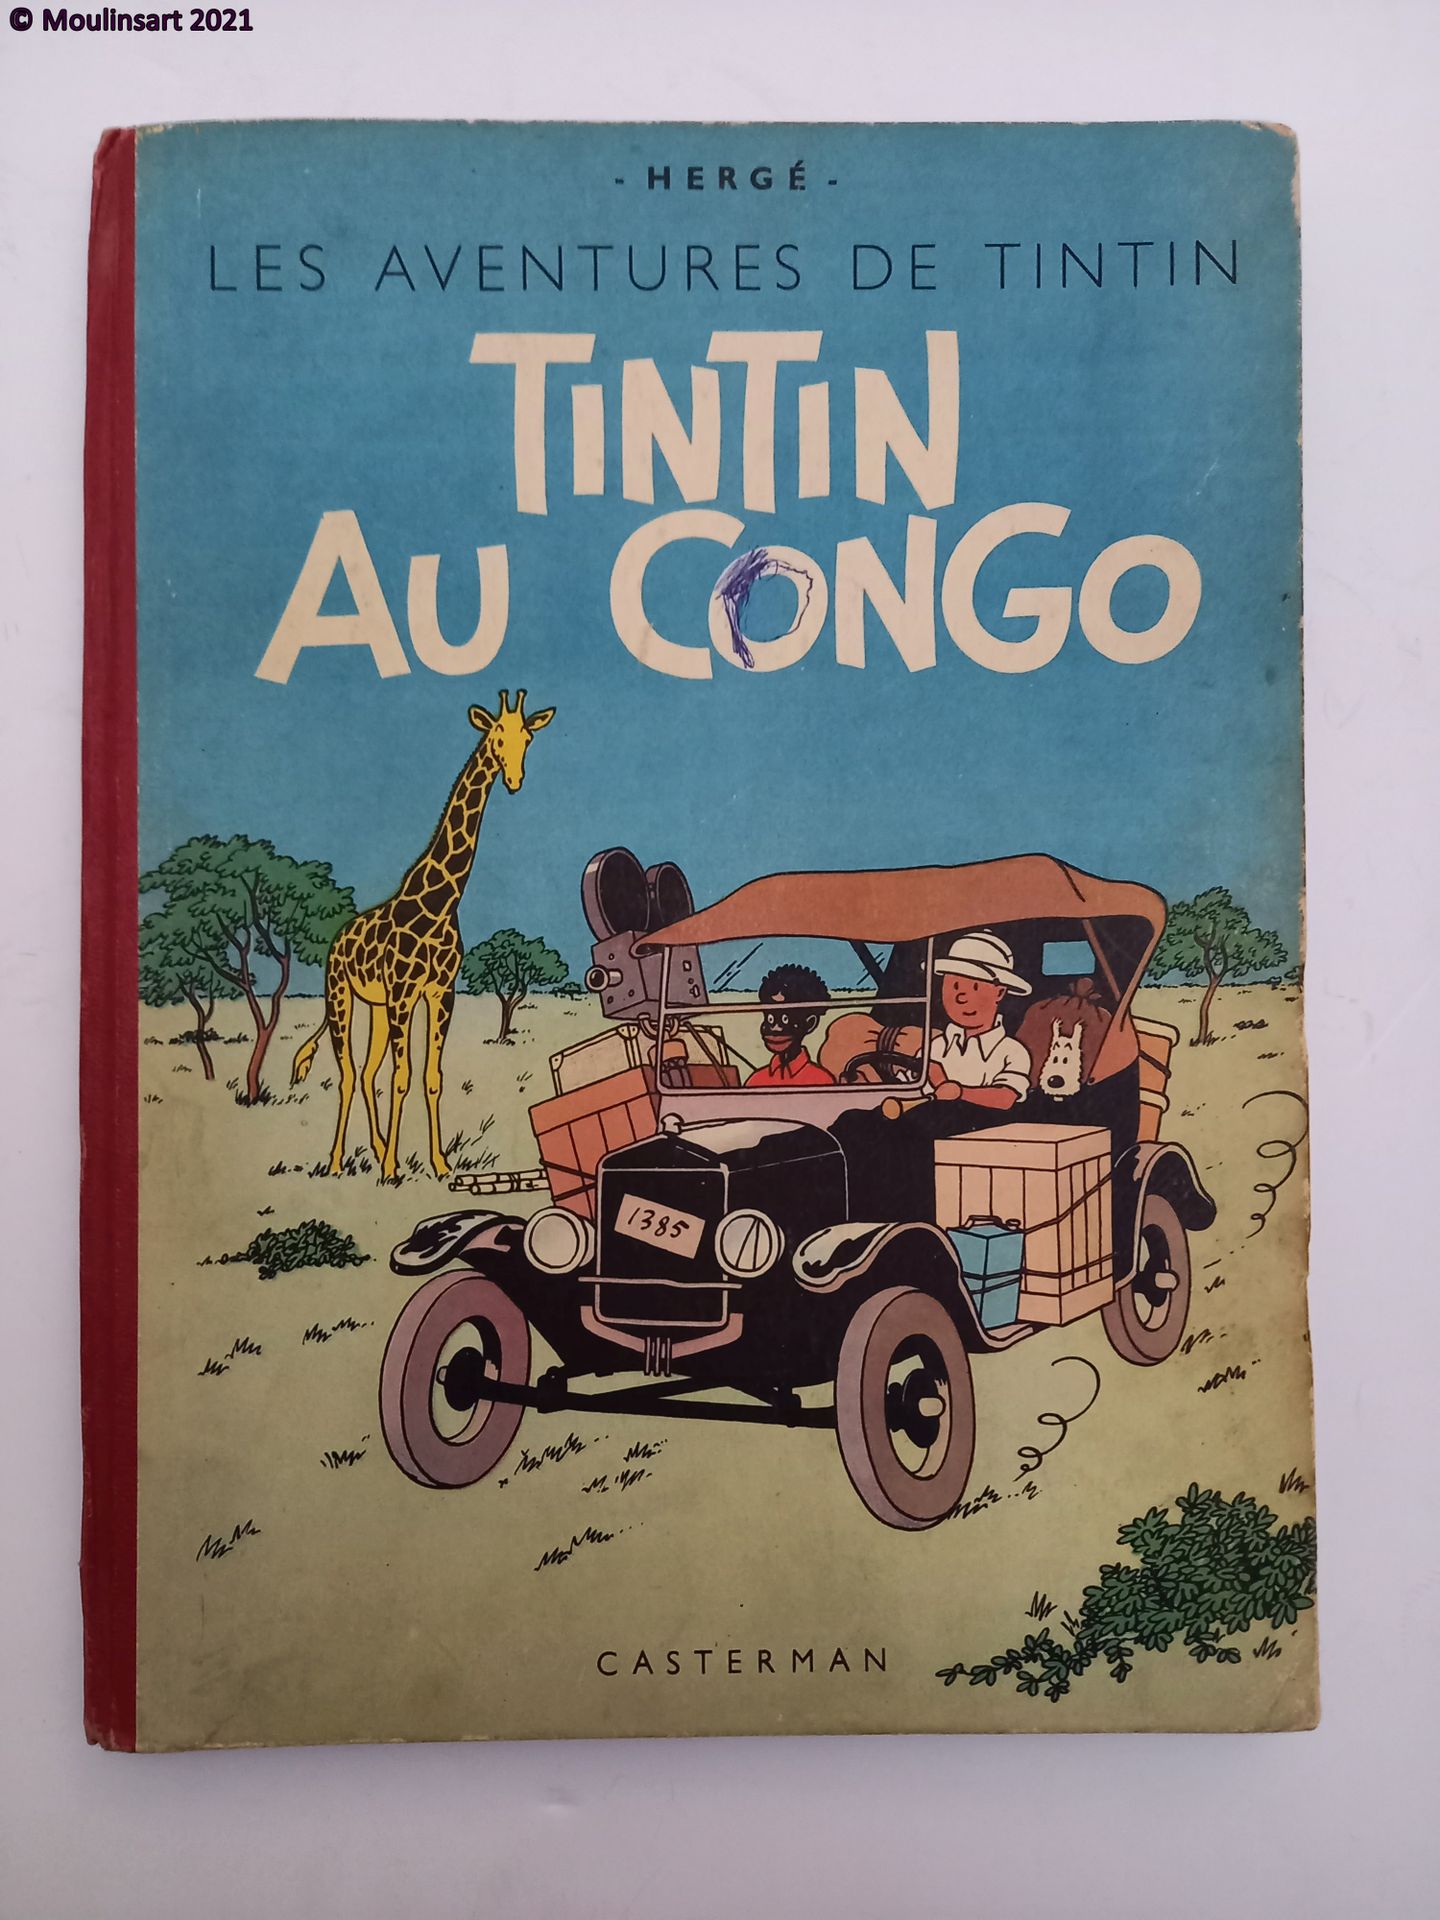 HERGÉ HERGE

Tintin au Congo





B1, DR, grande image, Casterman, au 1er plat, &hellip;